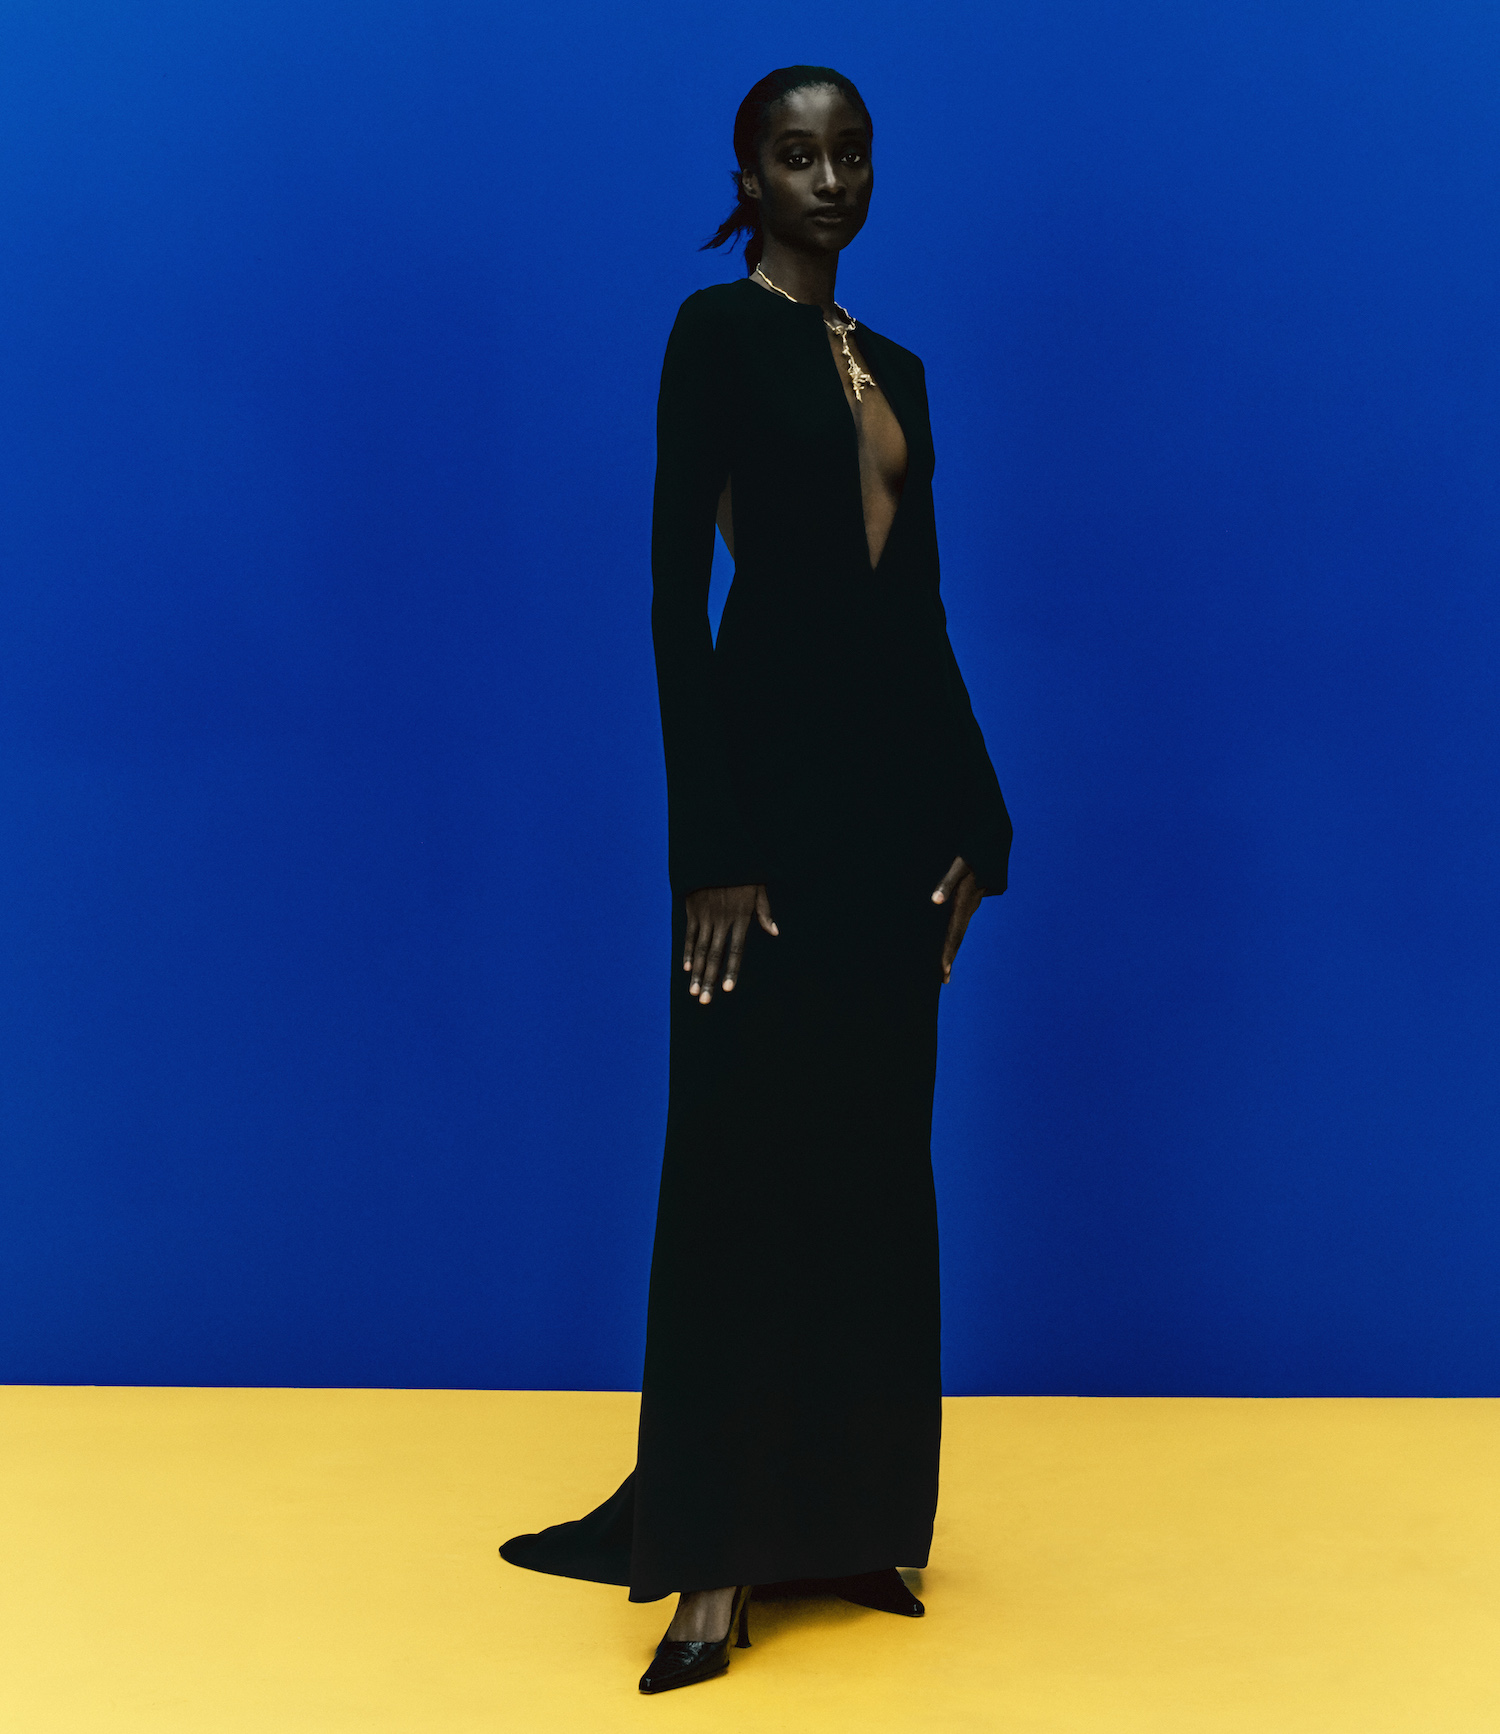 London designer Maximilian is bringing Black elegance to fashion - i-D